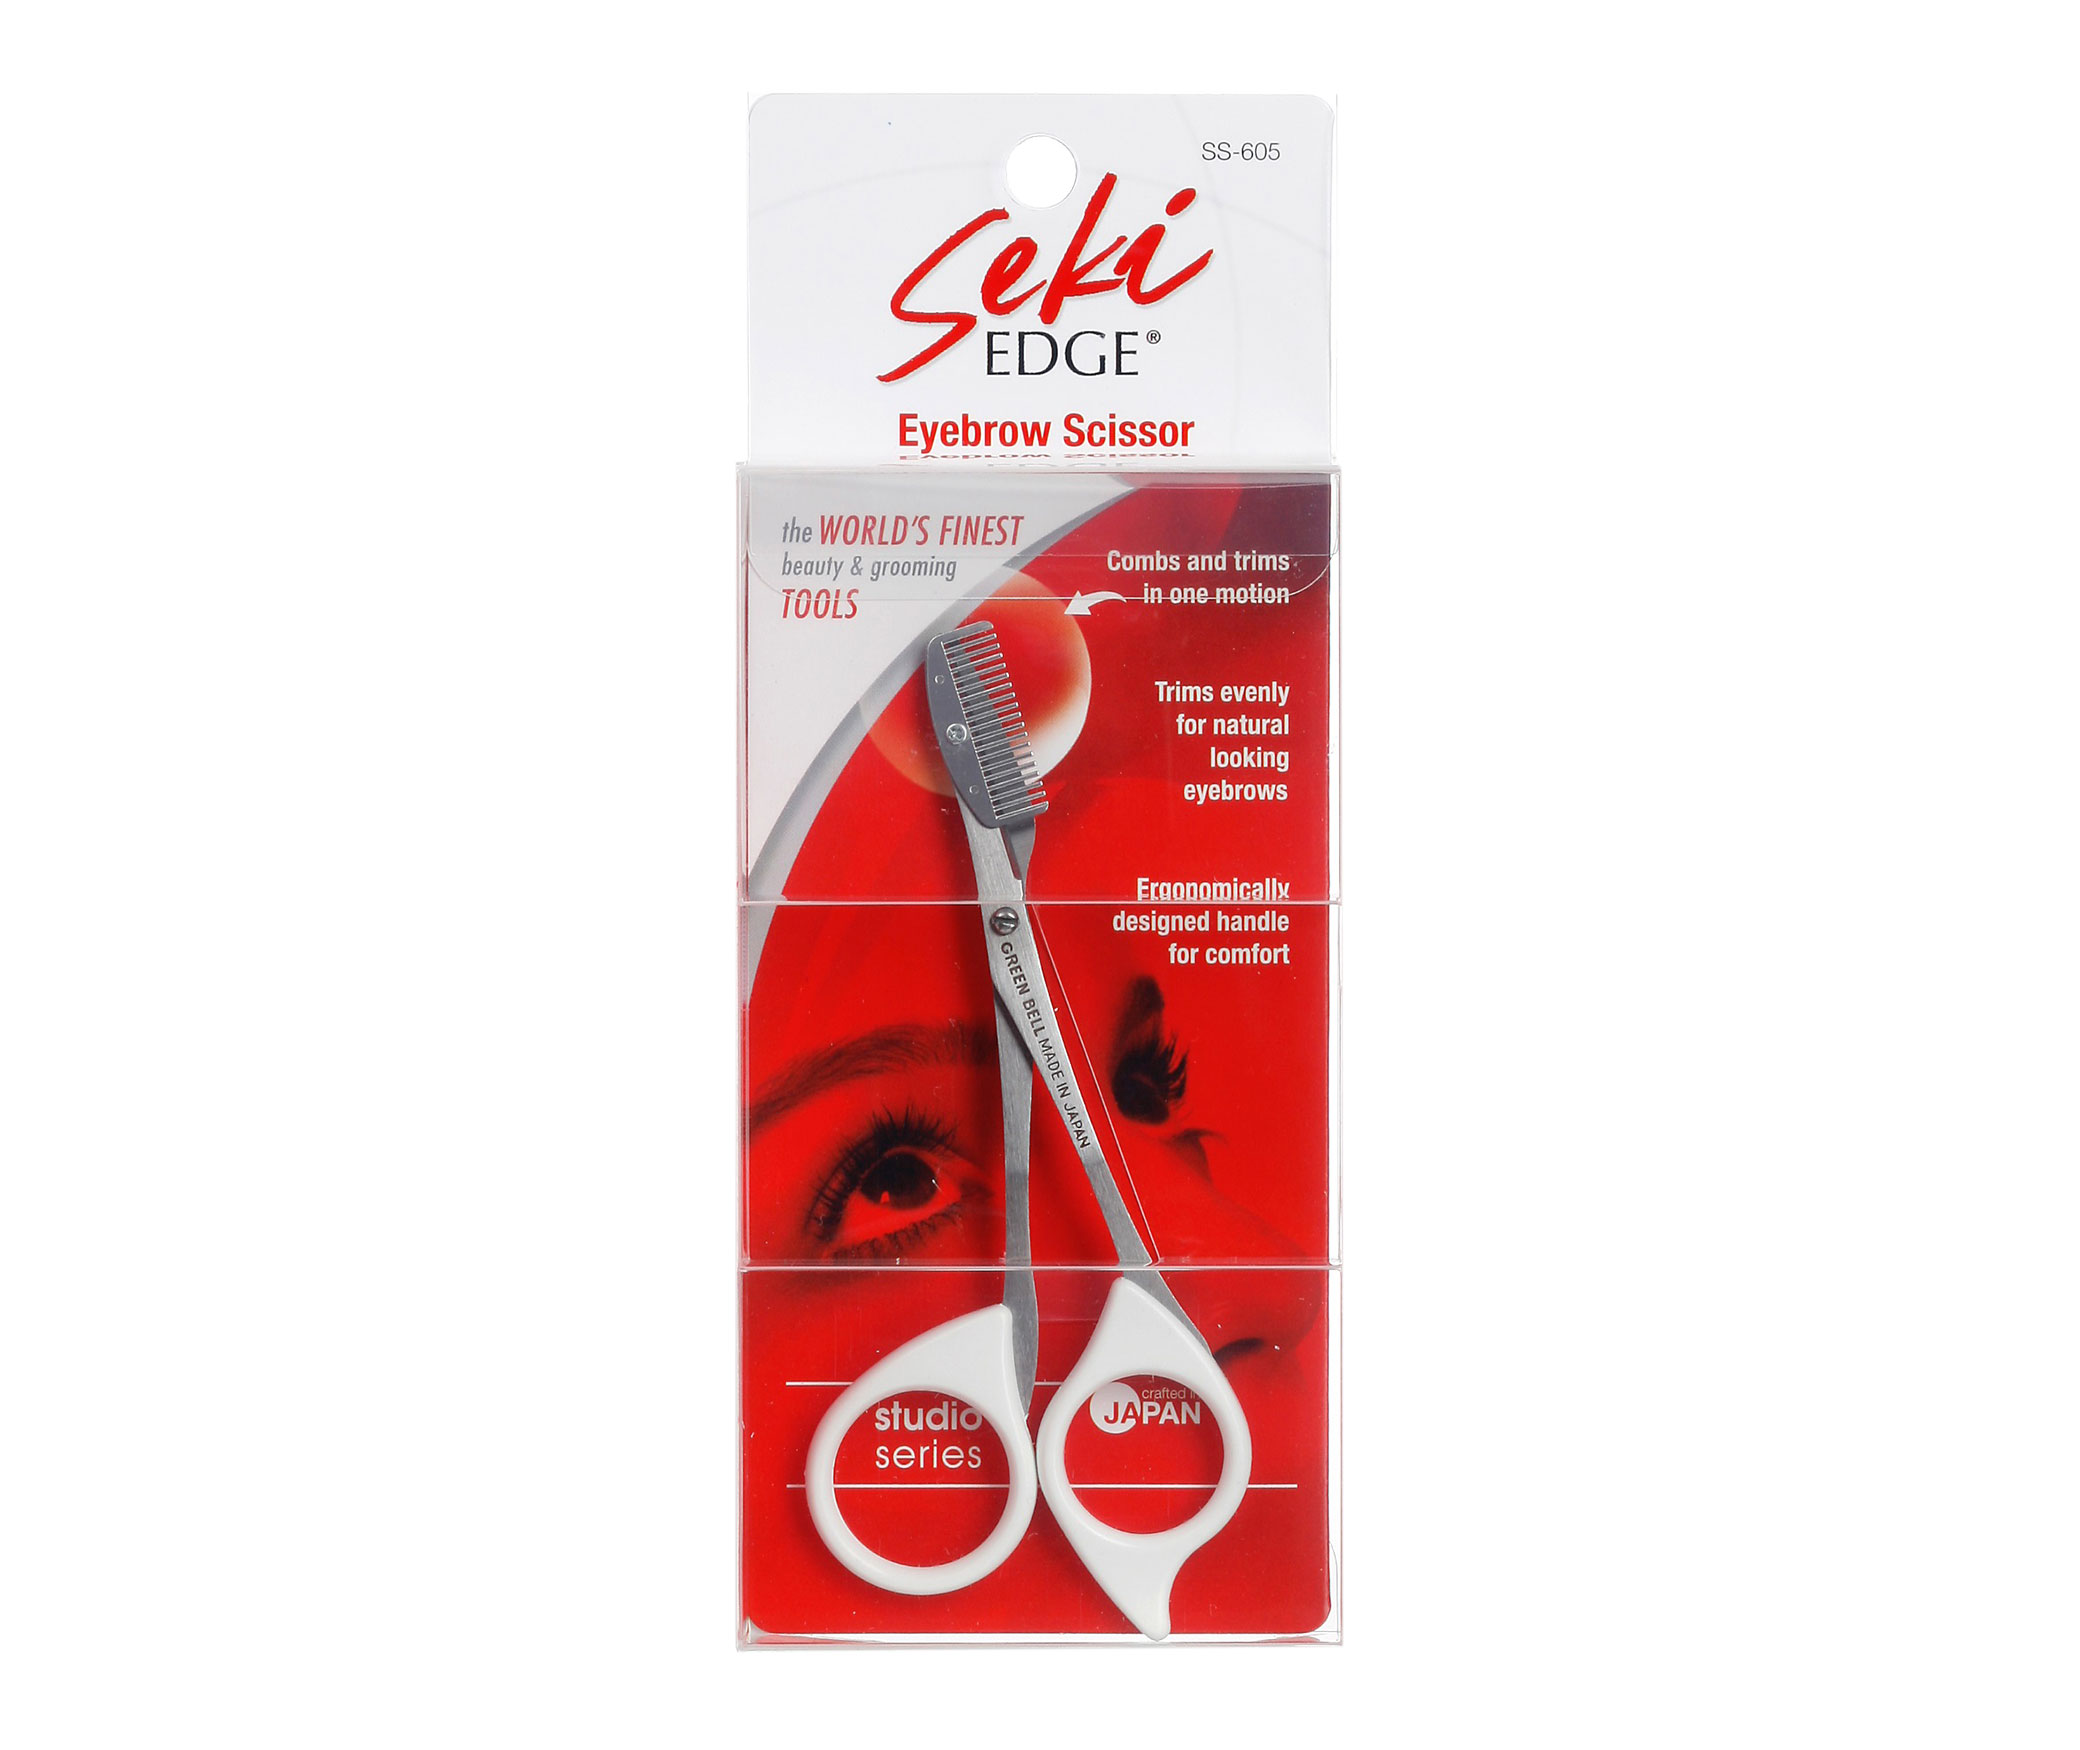 Seki Edge Eyebrow Comb Scissors (SS-605) package